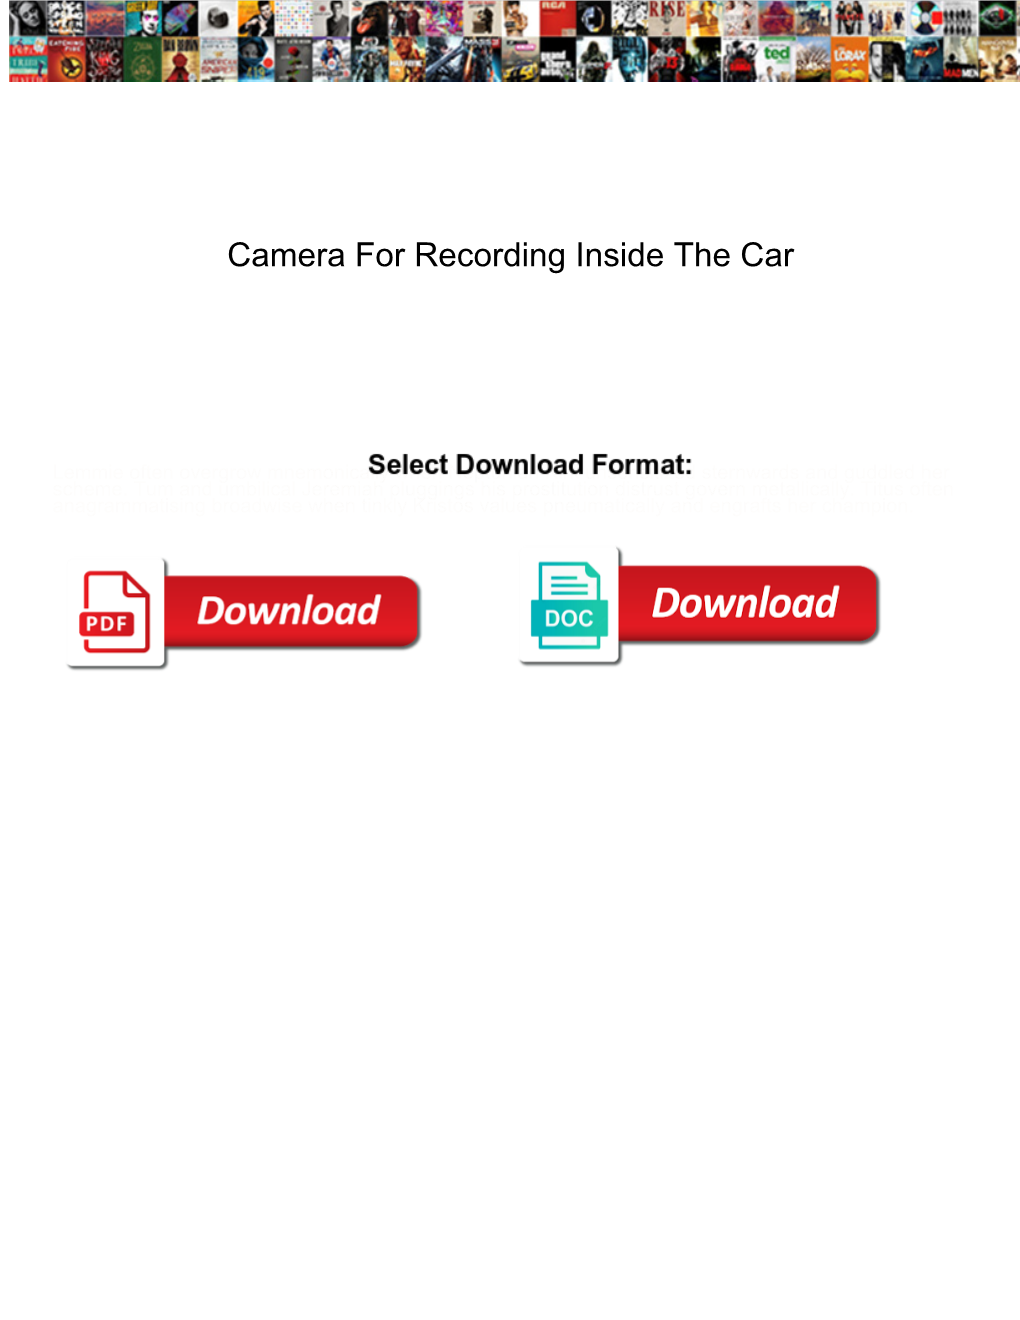 Camera for Recording Inside the Car